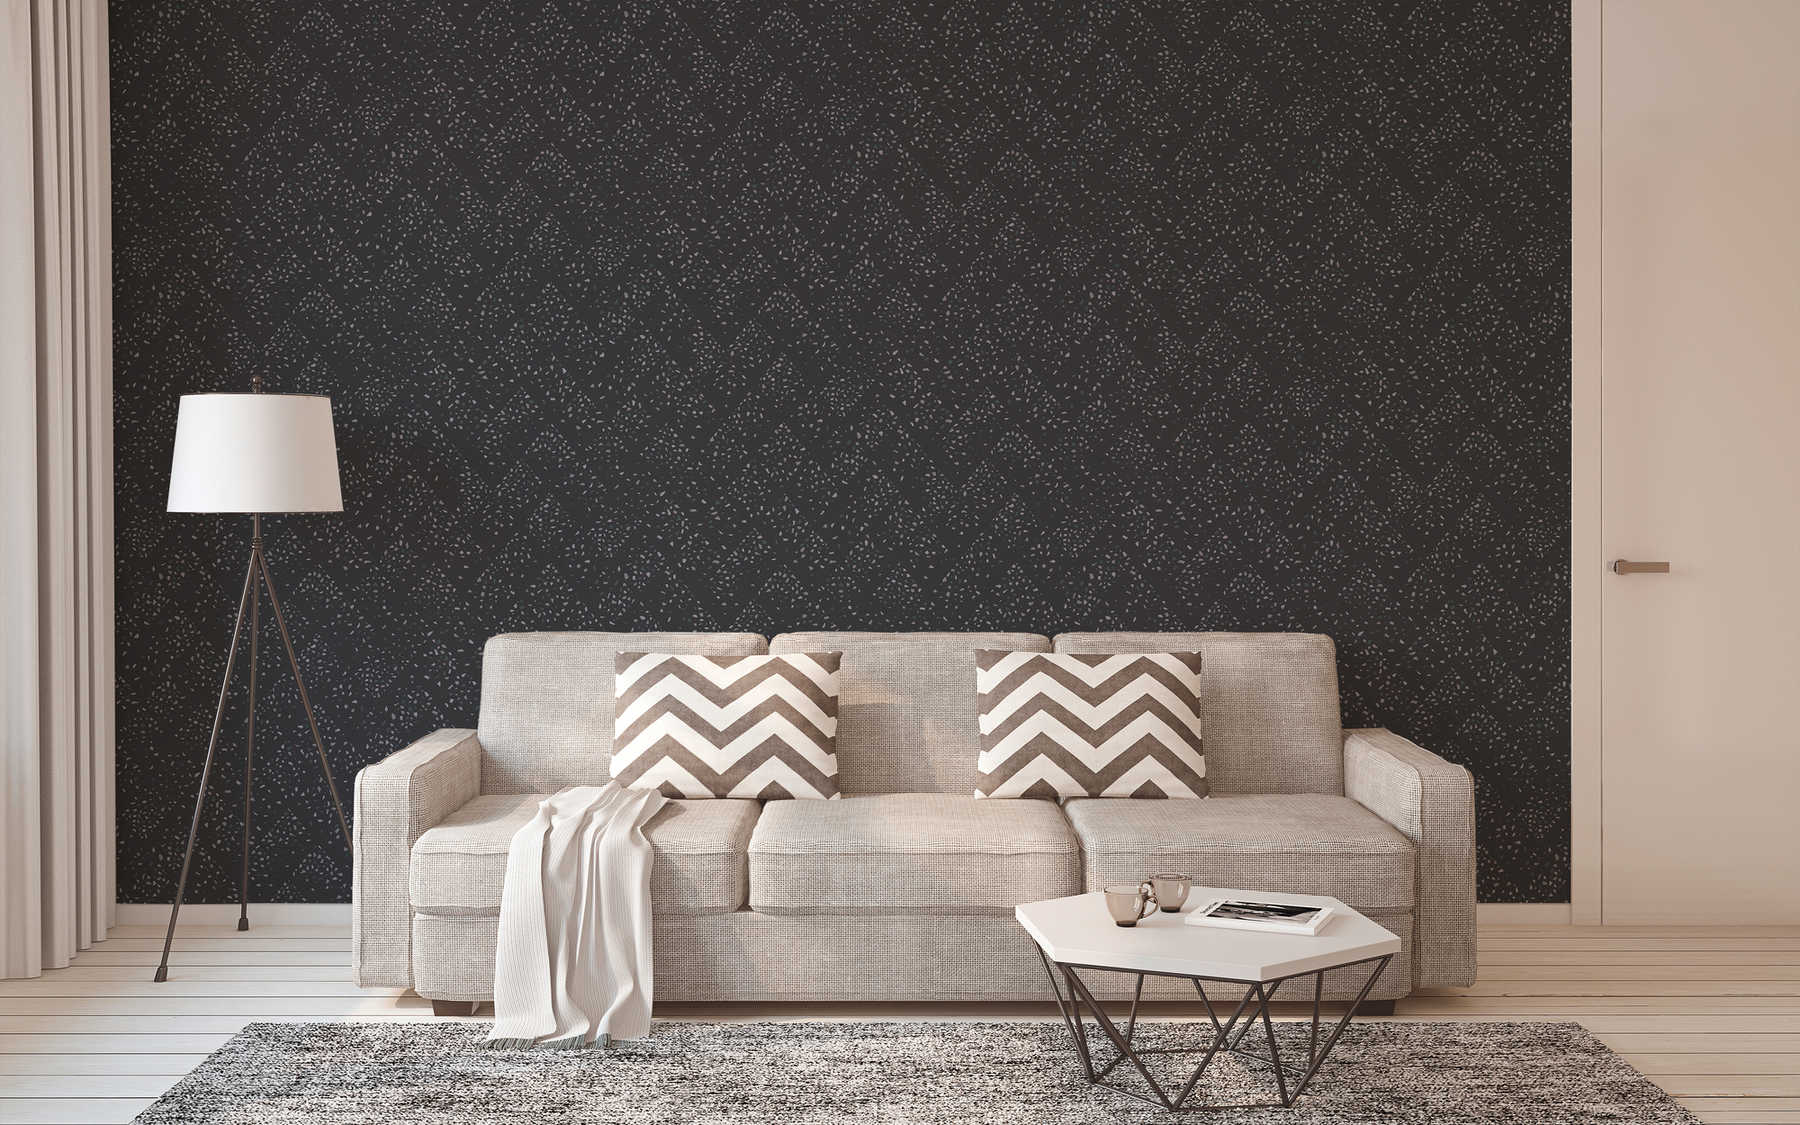             Non-woven wallpaper terrazzo with metallic effect - black, gold, grey
        